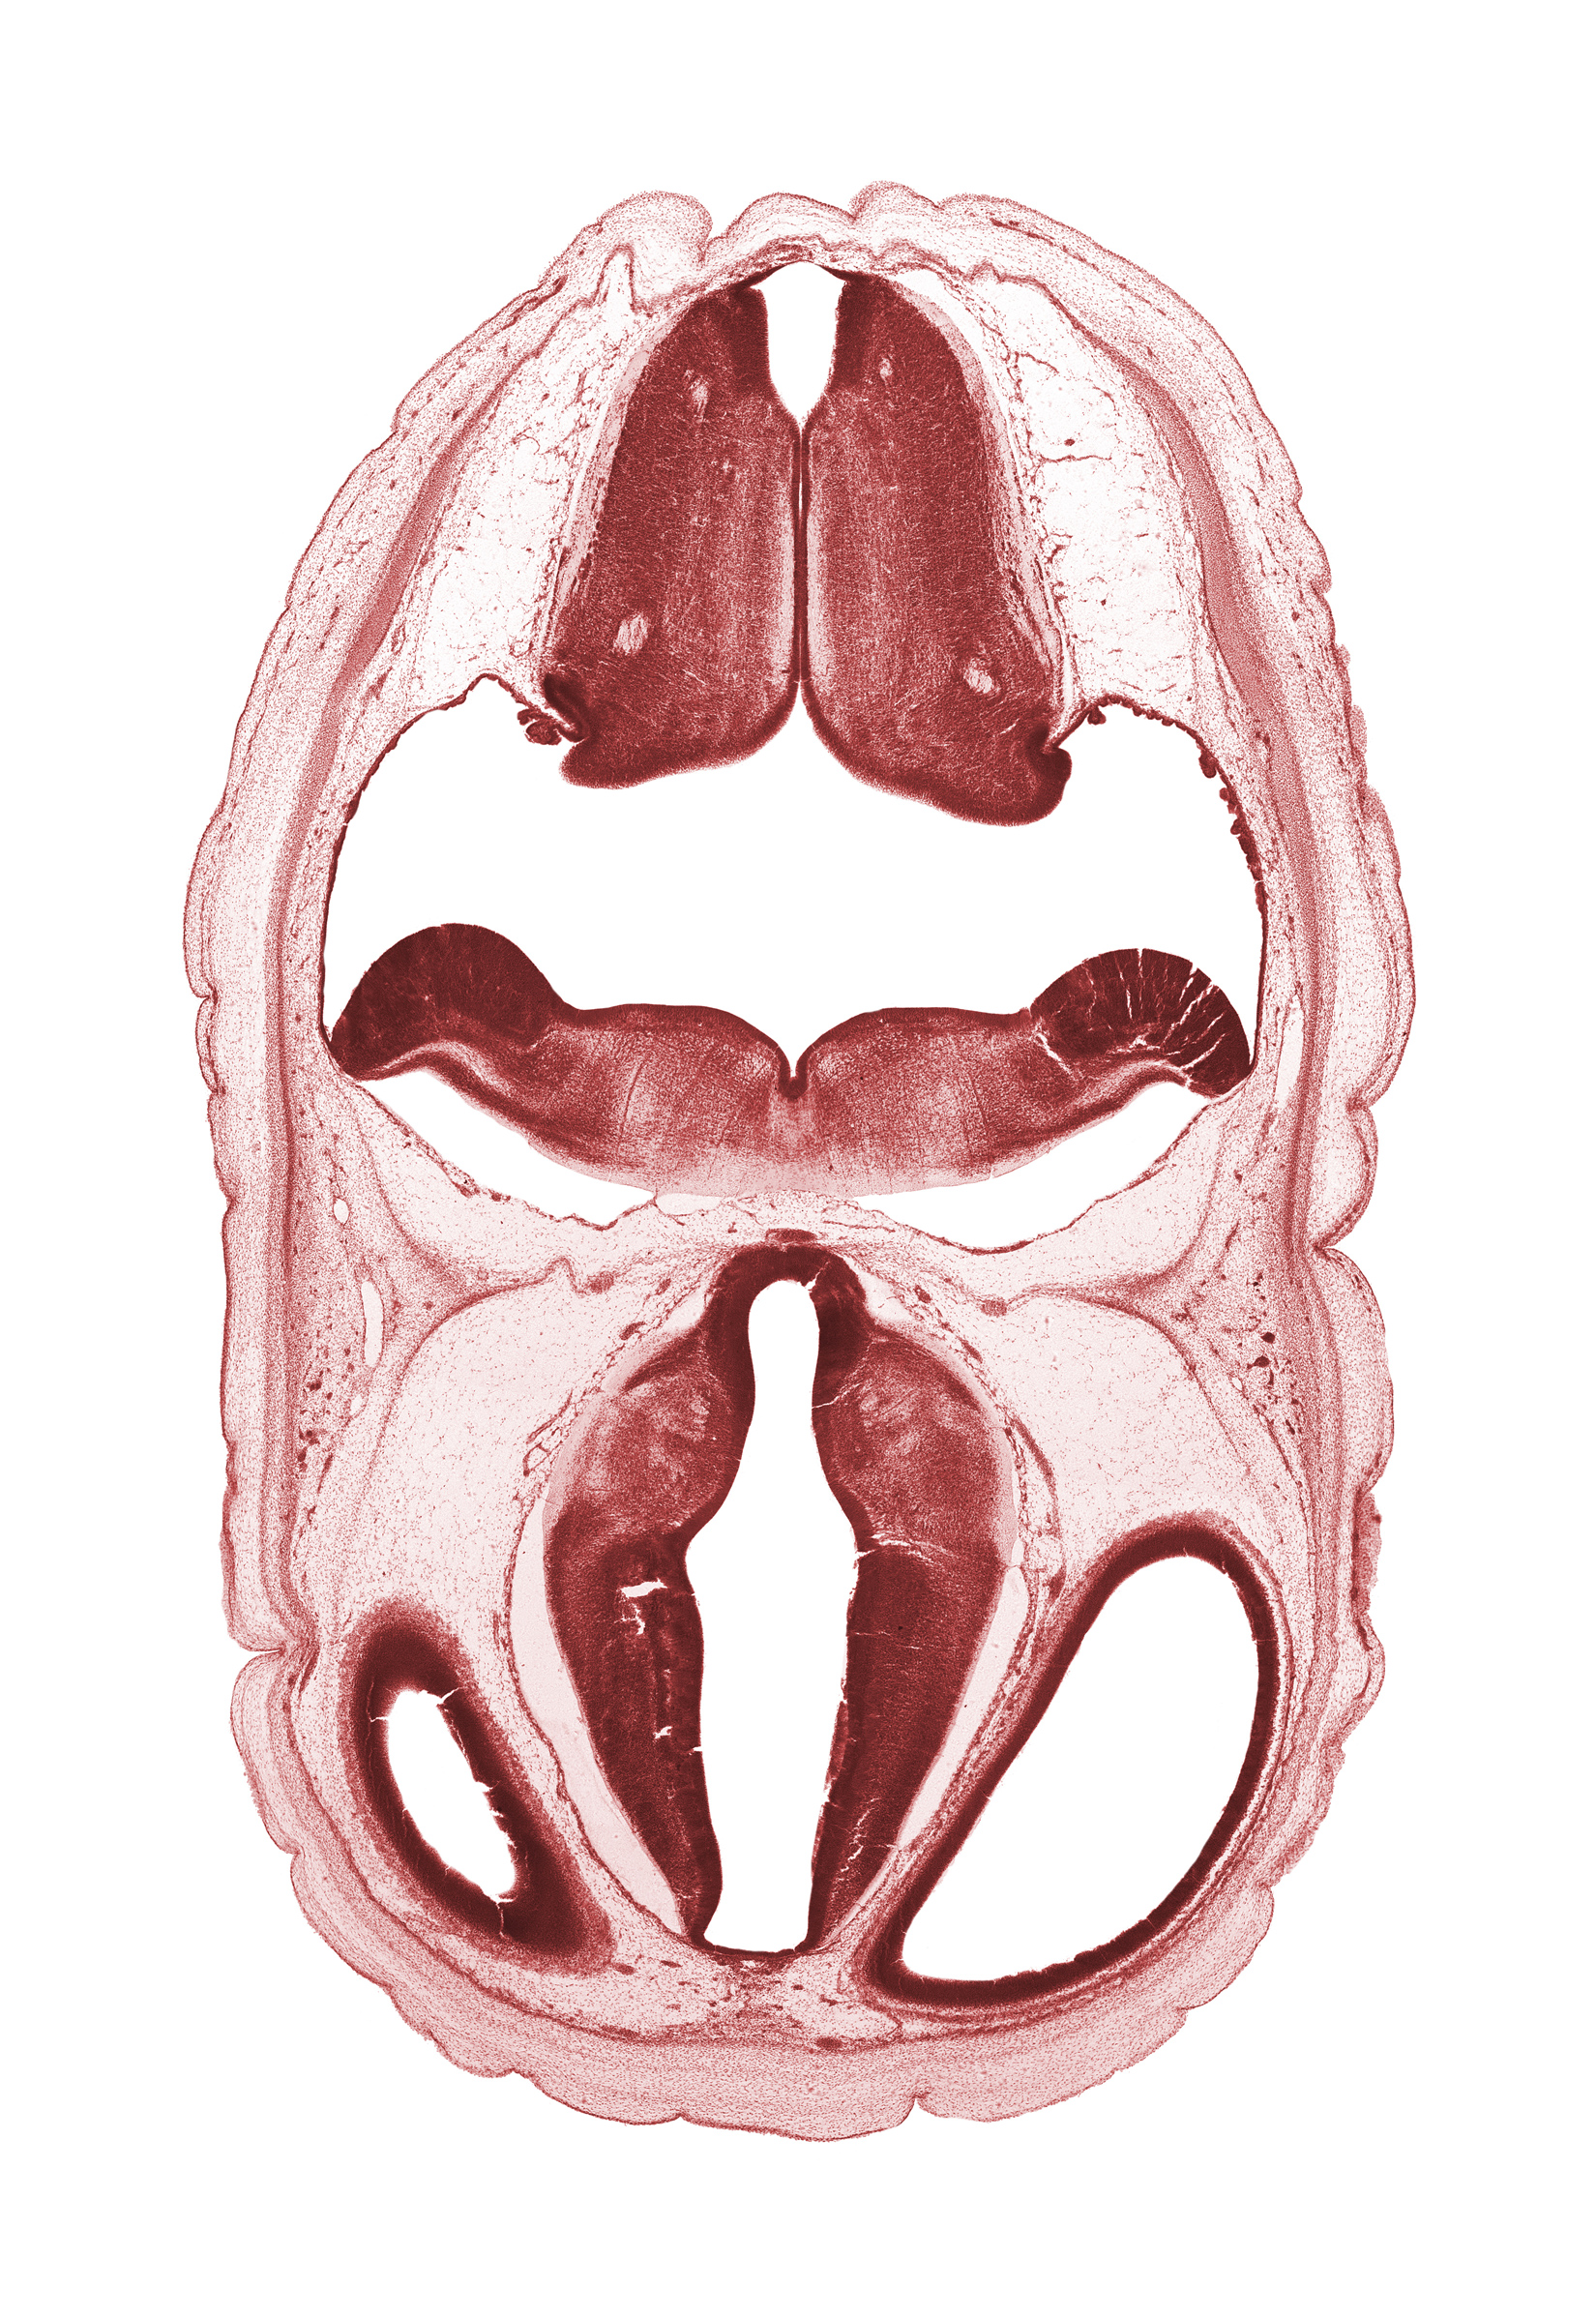 alar plate of metencephalon (cerebellum), artifact space(s), basal plate, edge of lateral ventricle, exoccipital, head mesenchyme, hypothalamic sulcus, hypothalamus, myelencephalon, oculomotor nerve (CN III), osteogenic layer, posterior communicating artery, subarachnoid space, sulcus limitans, surface ectoderm, trochlear nerve (CN IV), vascular plexus